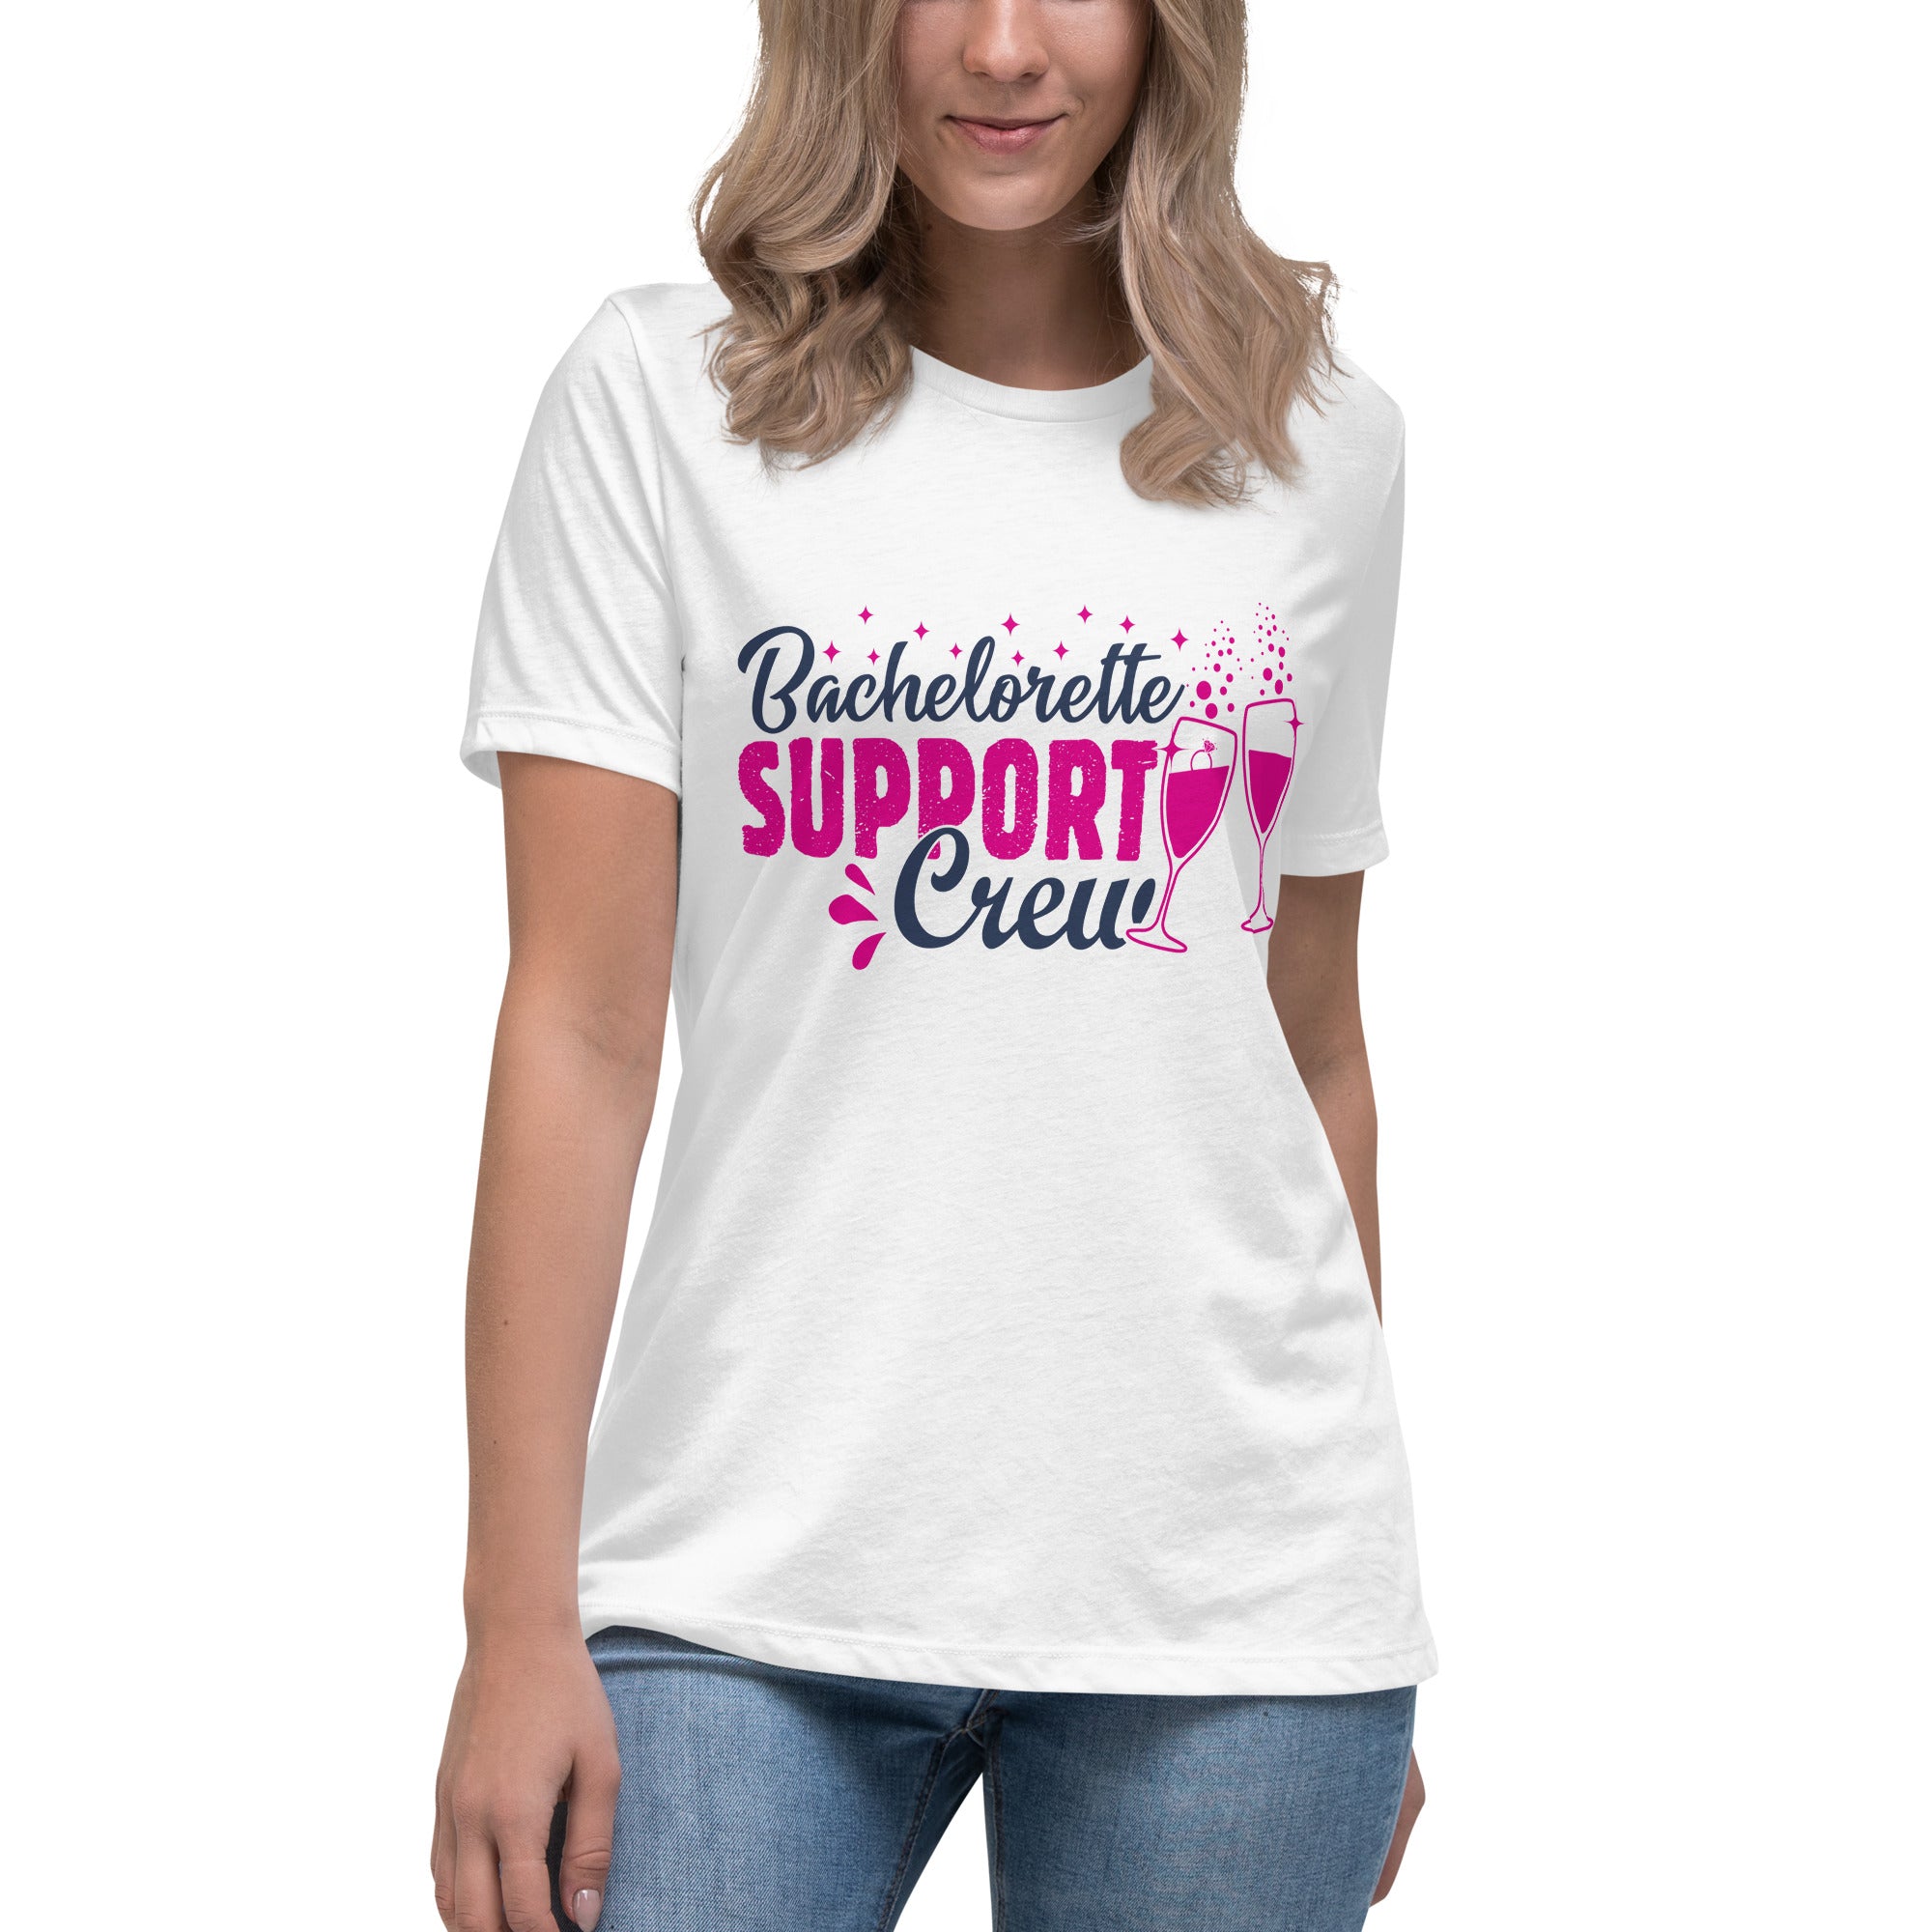 Bachelorette Support Crew Women's Relaxed T-Shirt